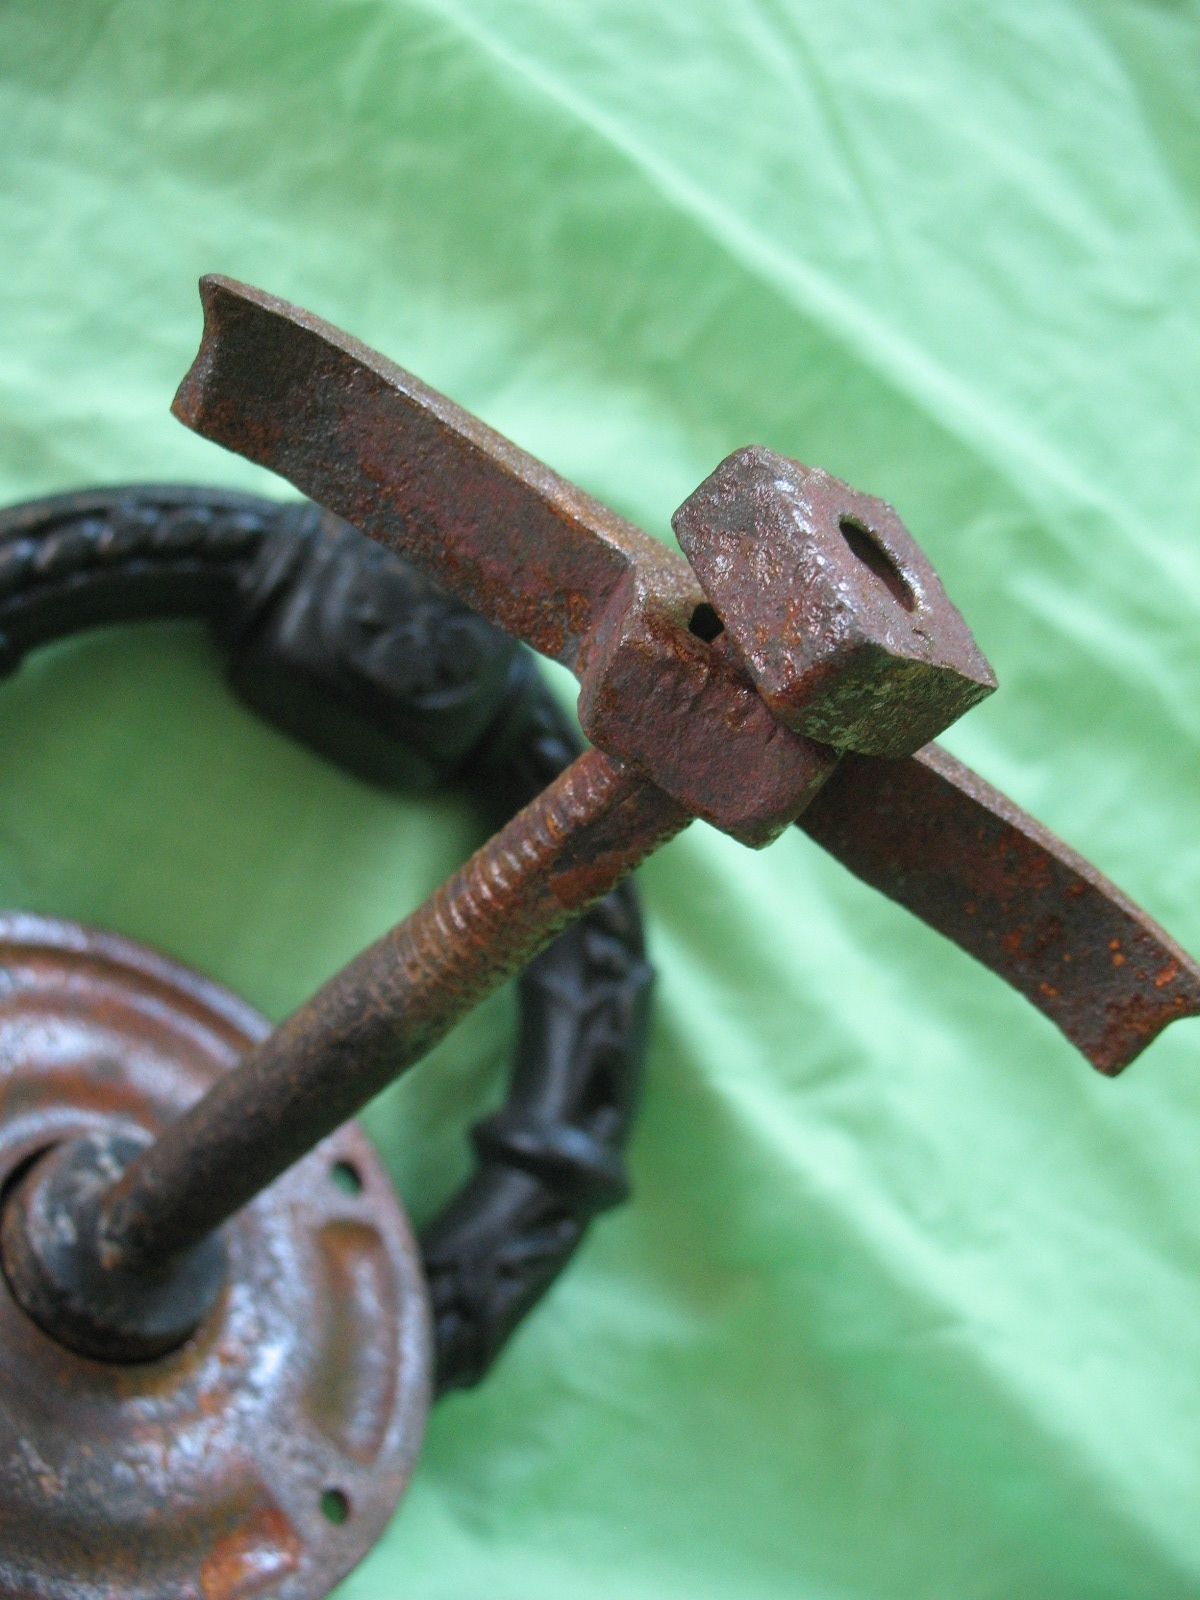 Old antique reclaim cast iron gothic door pull handle come door knocker signed